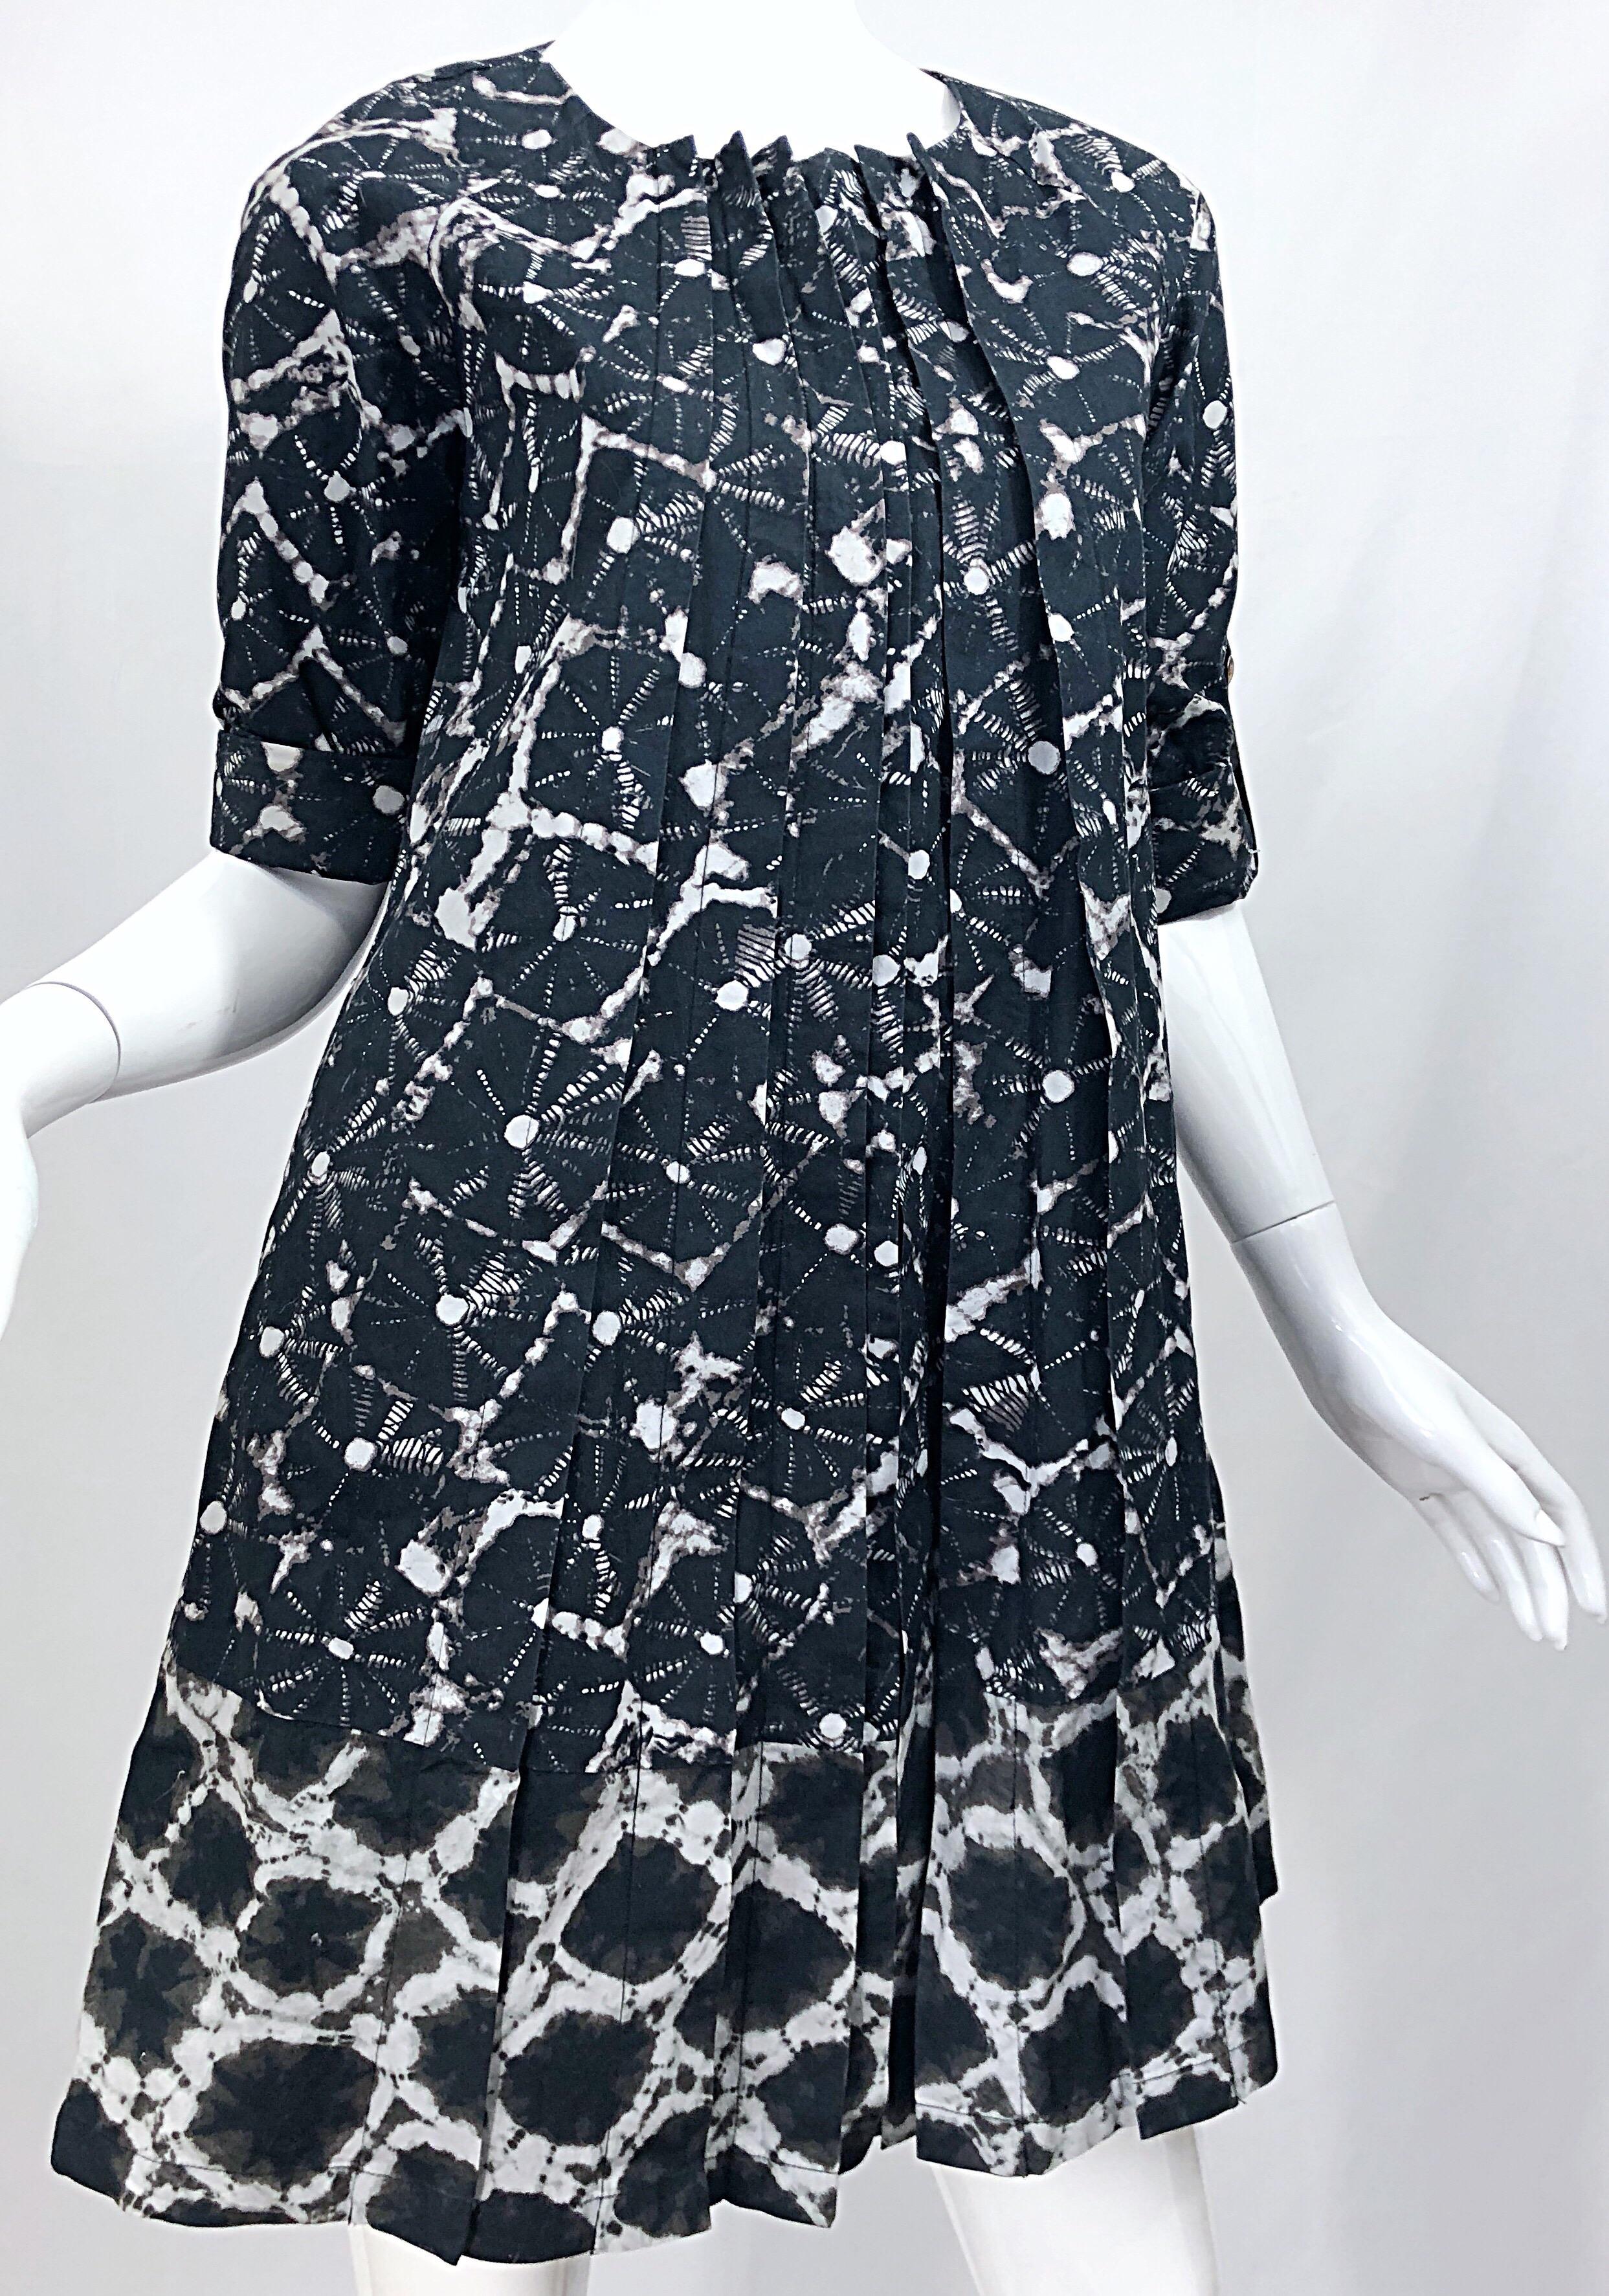 Women's Thakoon Spring 2008 Black White Abstract Tie Dye Trapeze Swing Dress Jacket For Sale